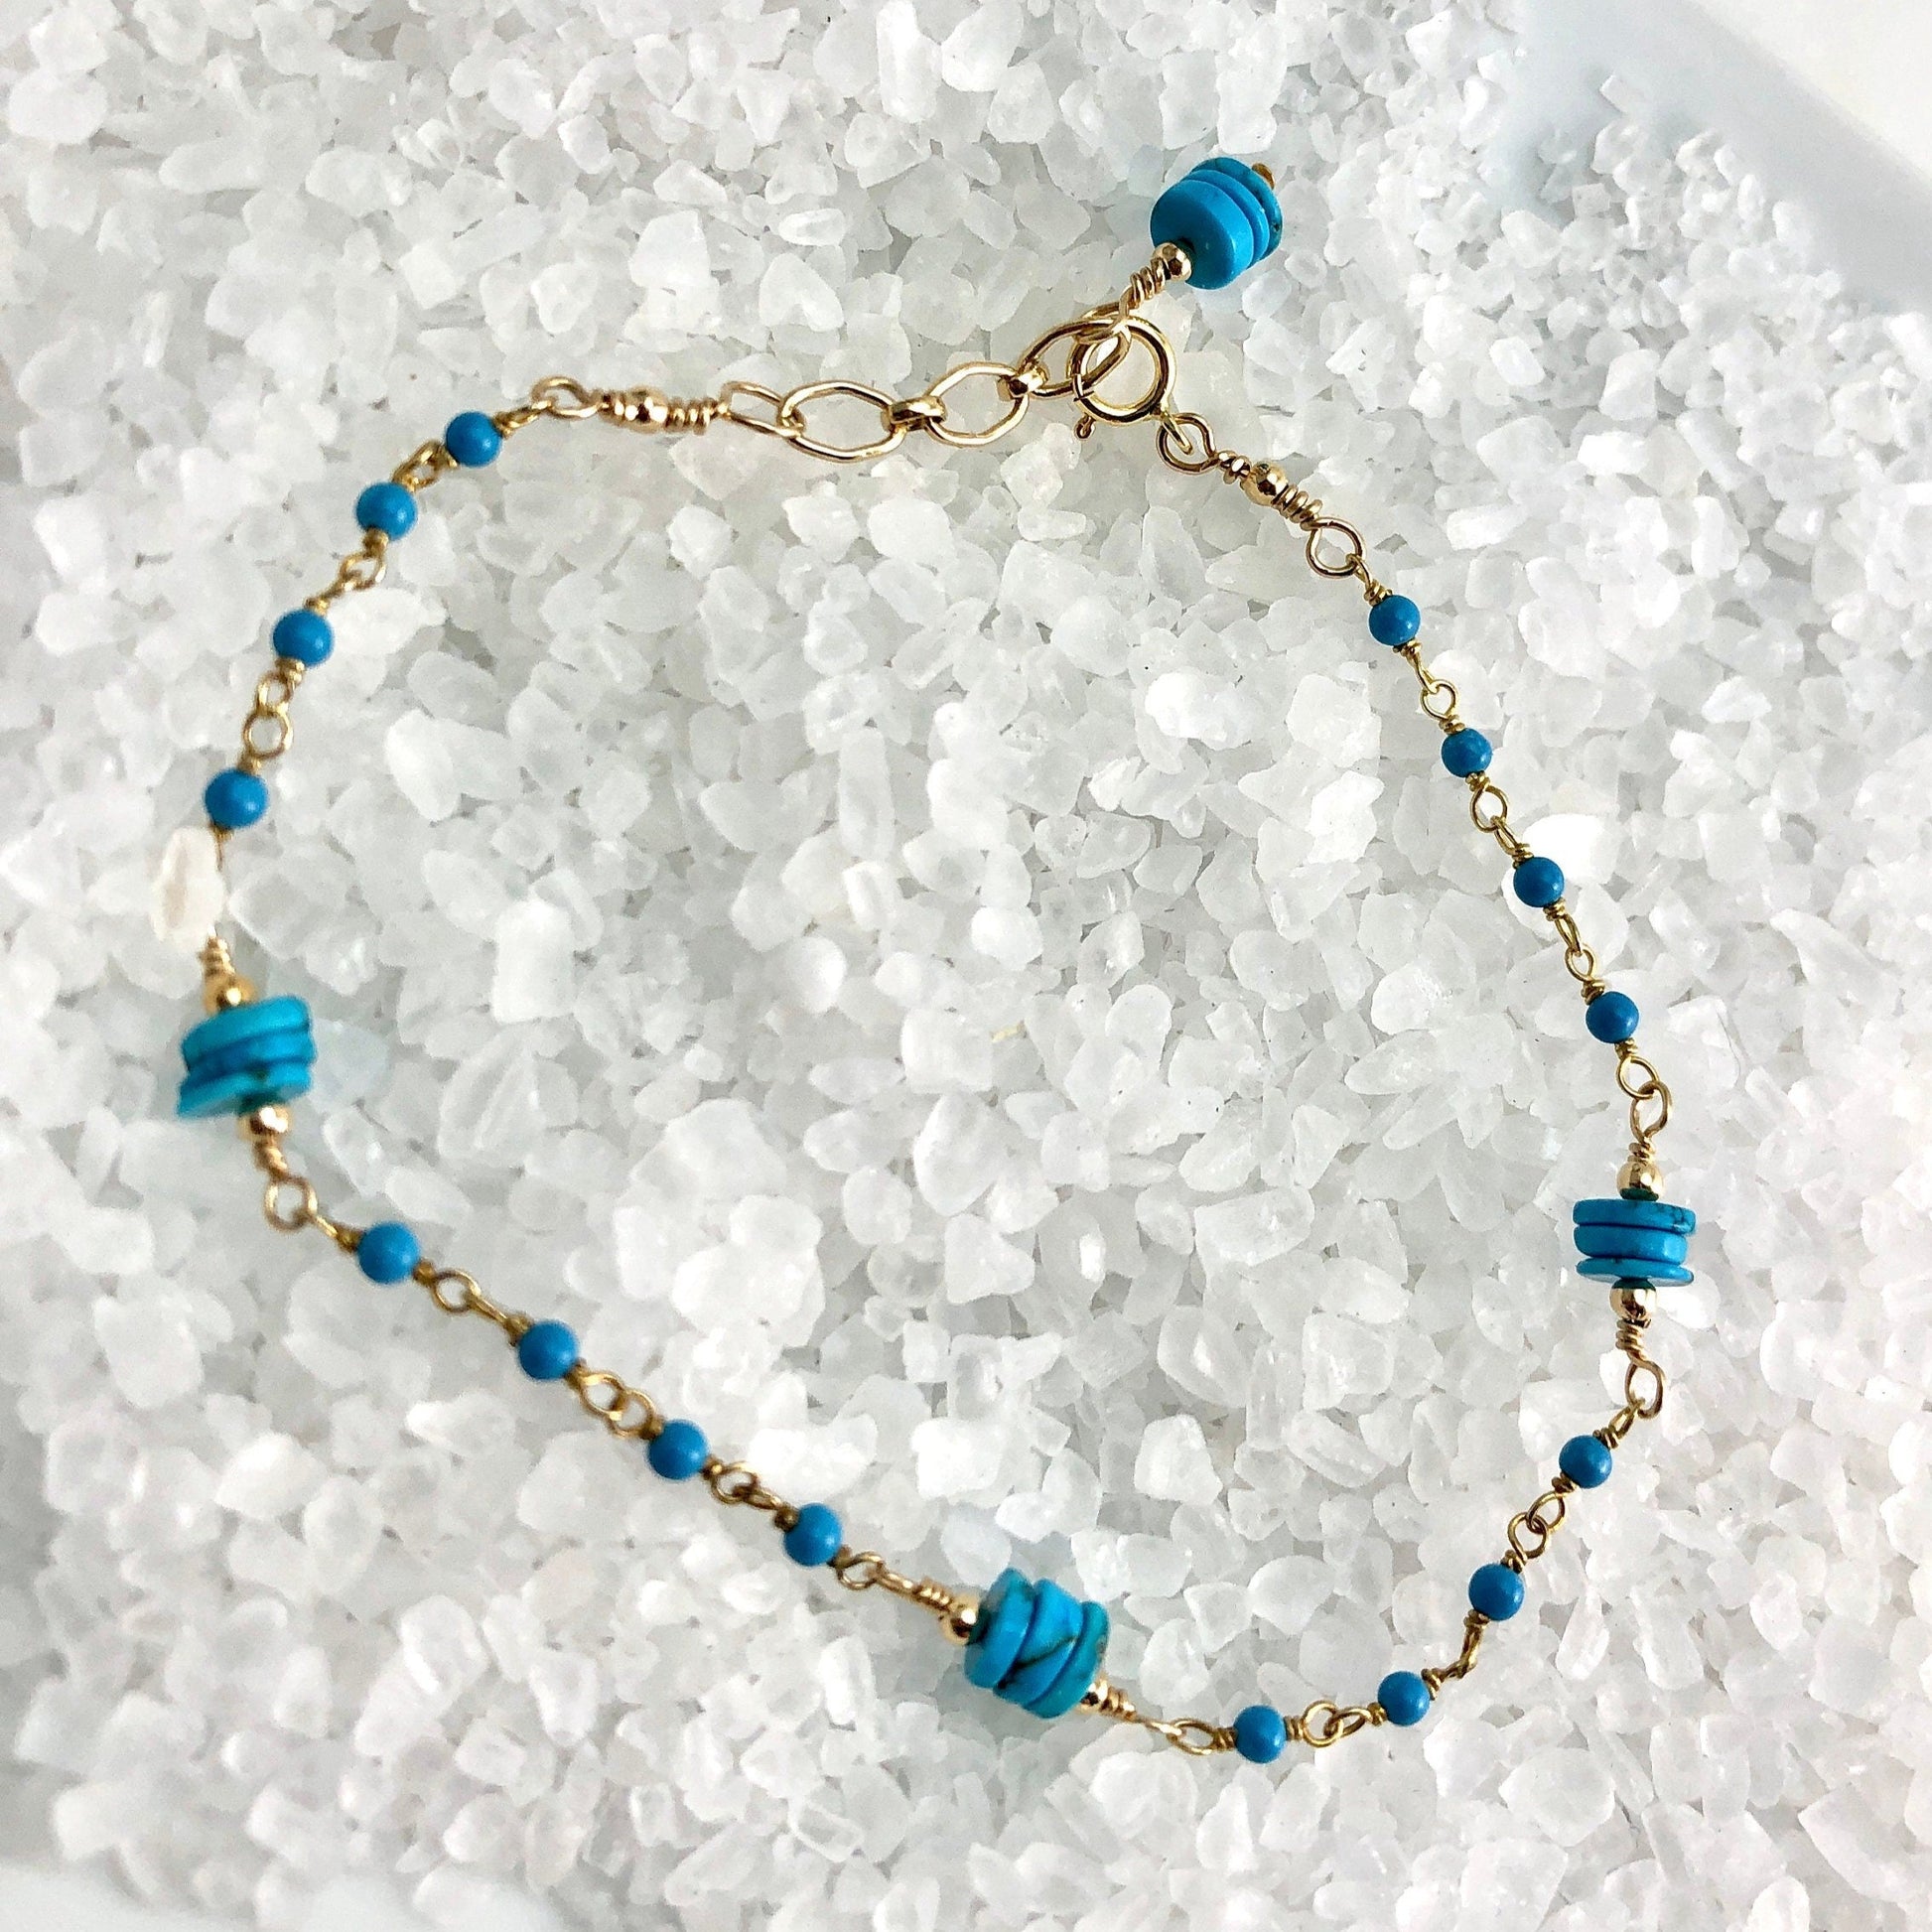 Sleeping Beauty Turquoise bracelet